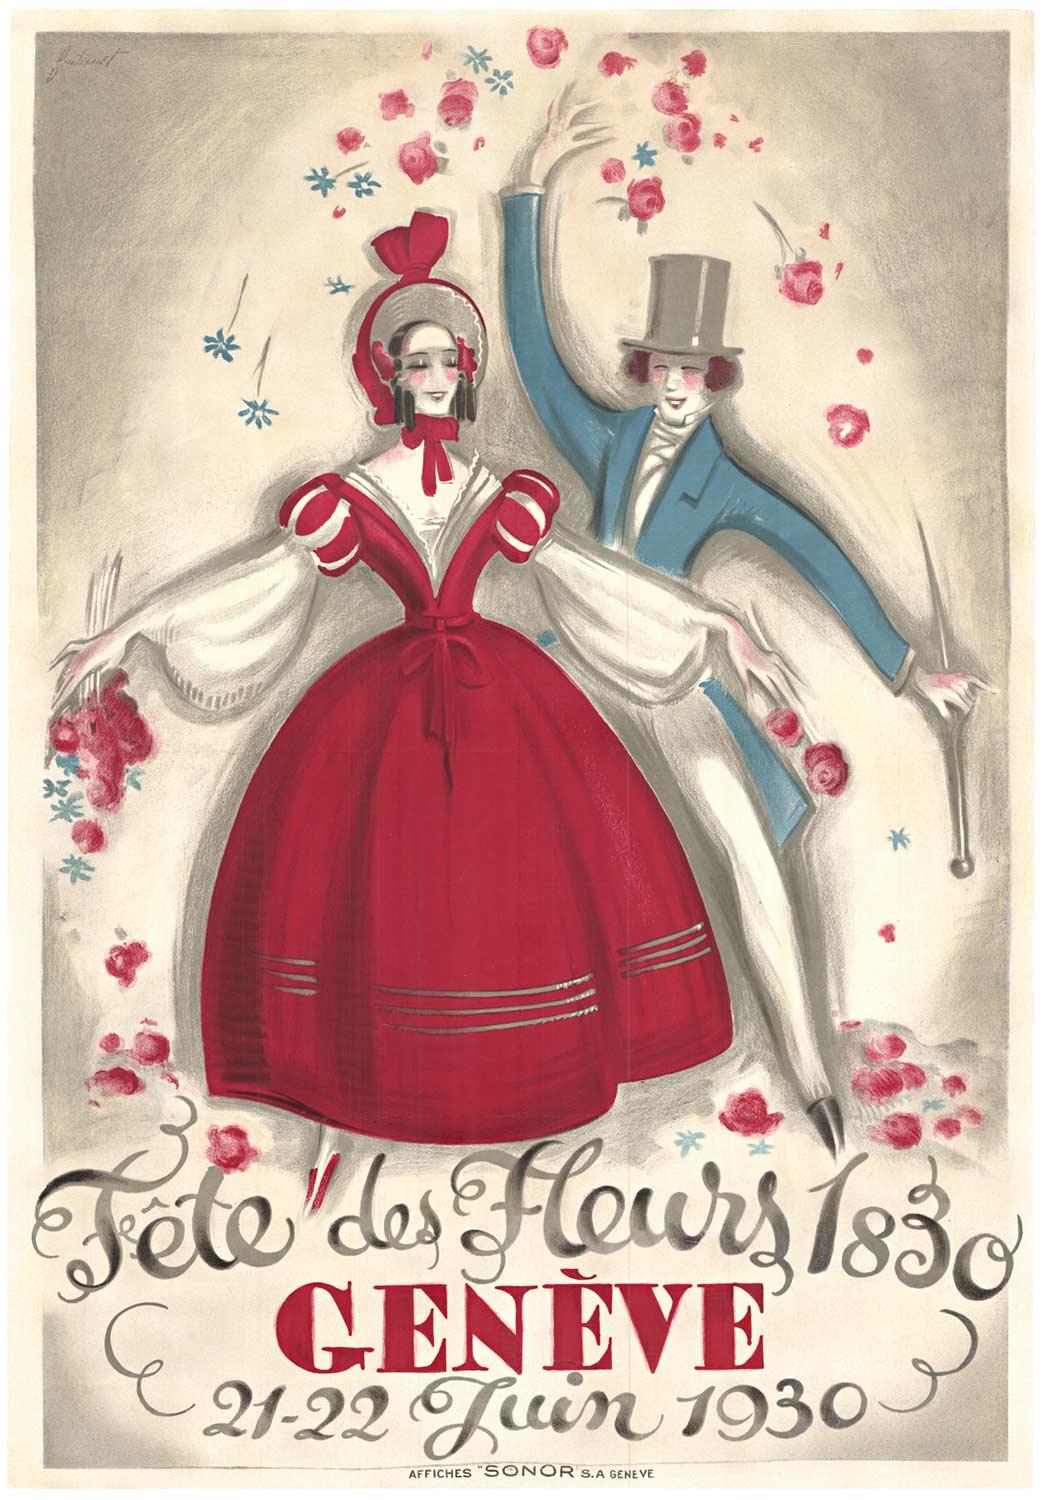 Original Geneva, Festival of Flowers, Geneve, Fete des Fleurs vintage poster